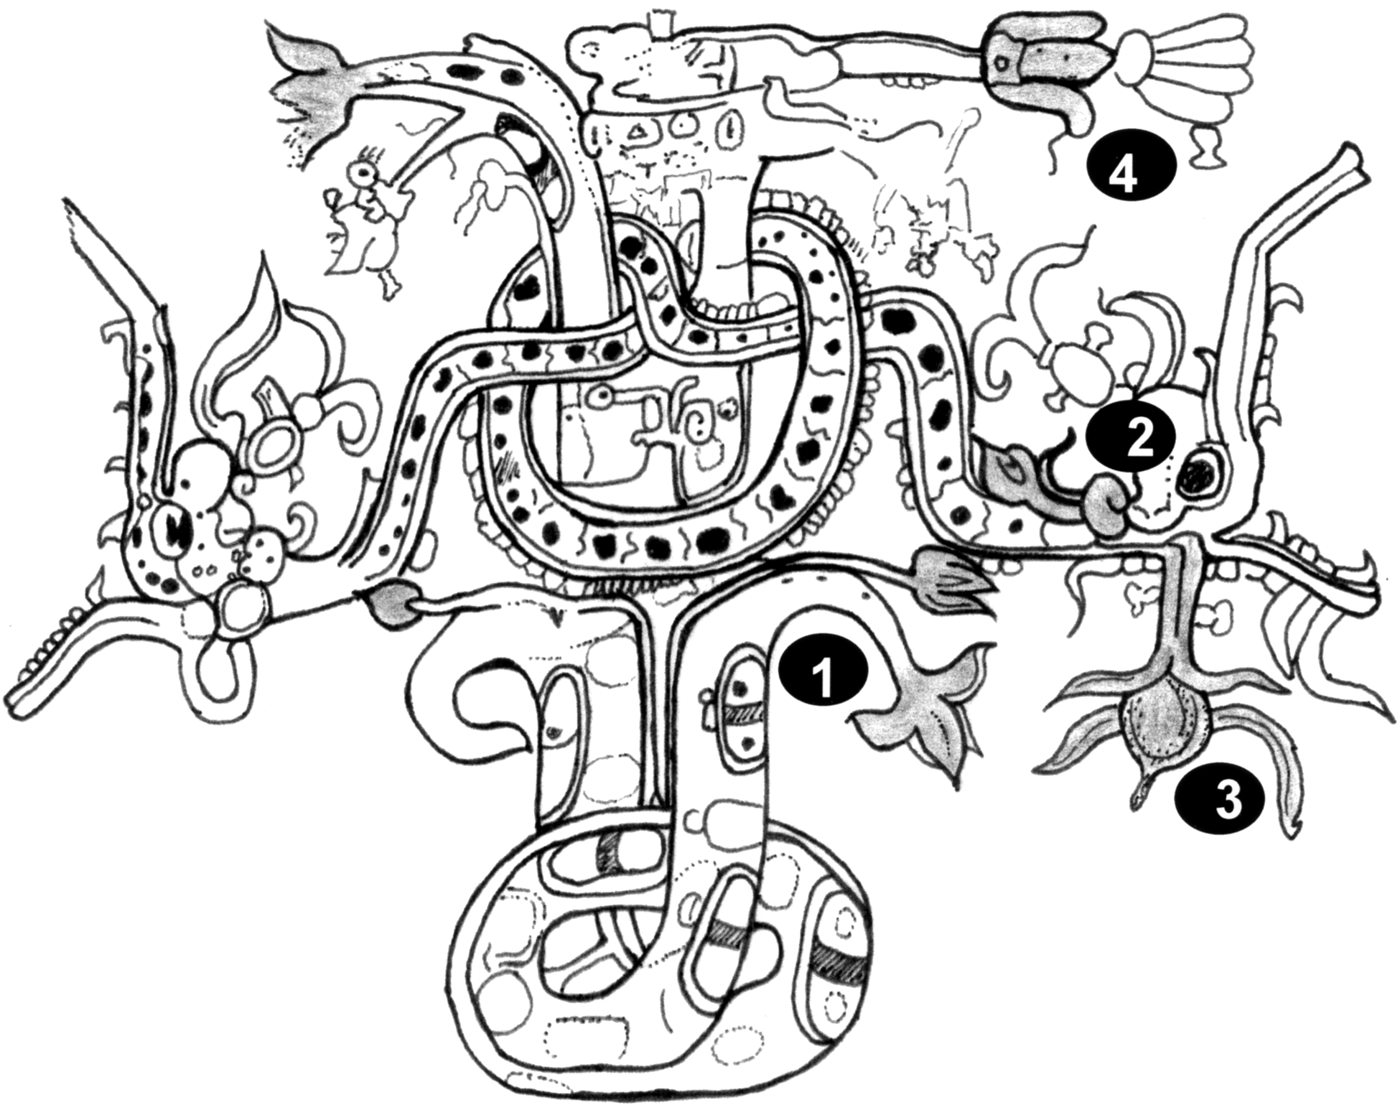 mayan tree of life symbol